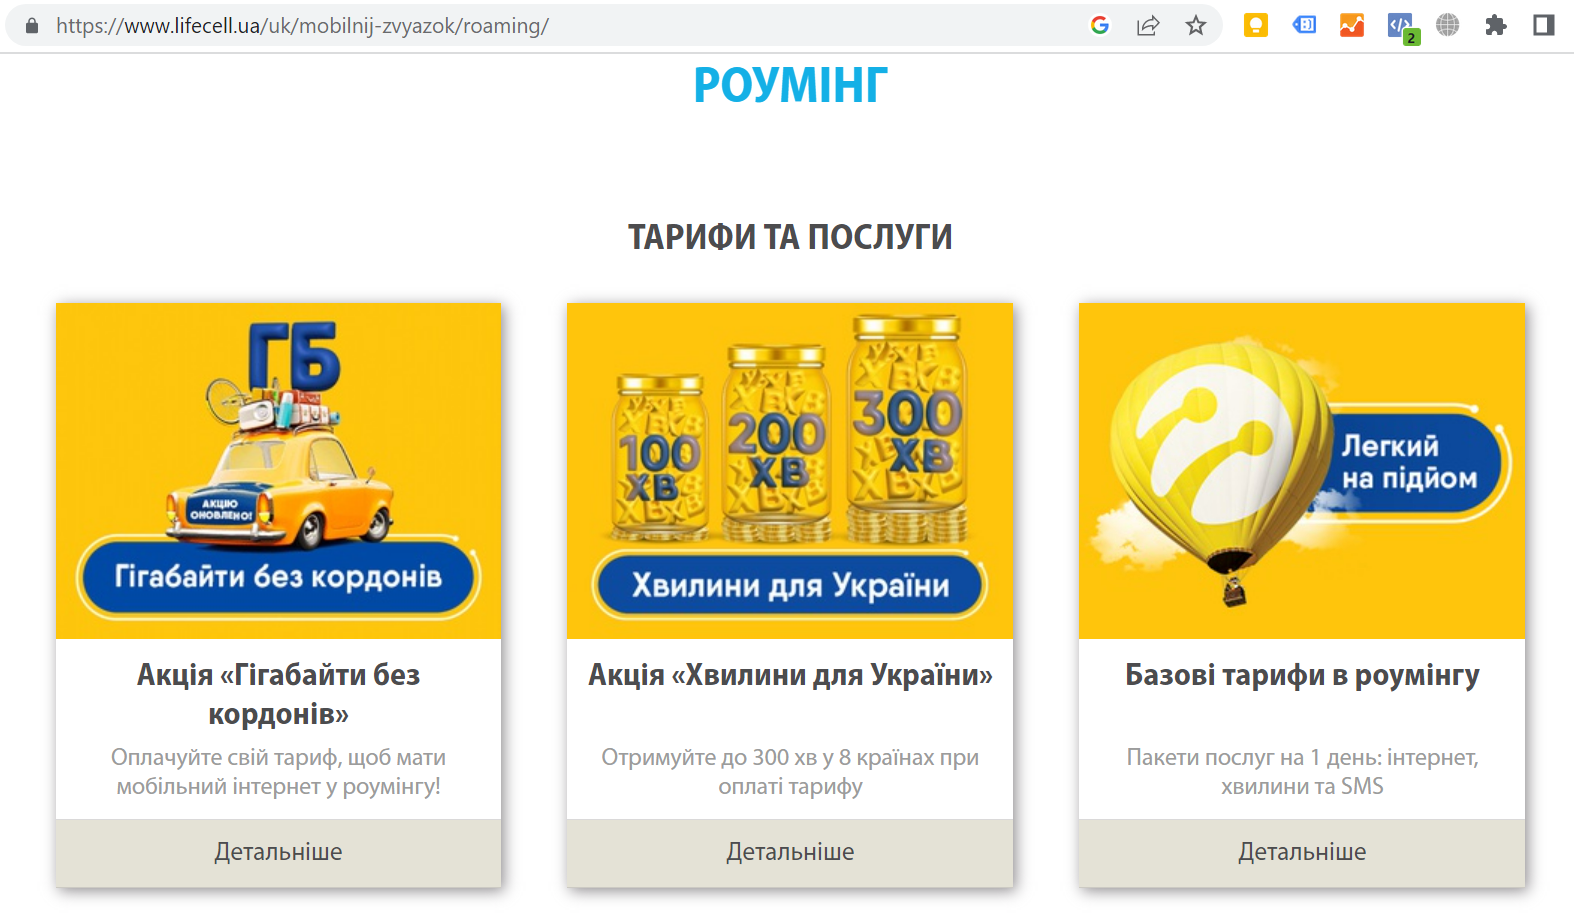 roaming v ispanii lifecell life ukraina bazovie tarifi